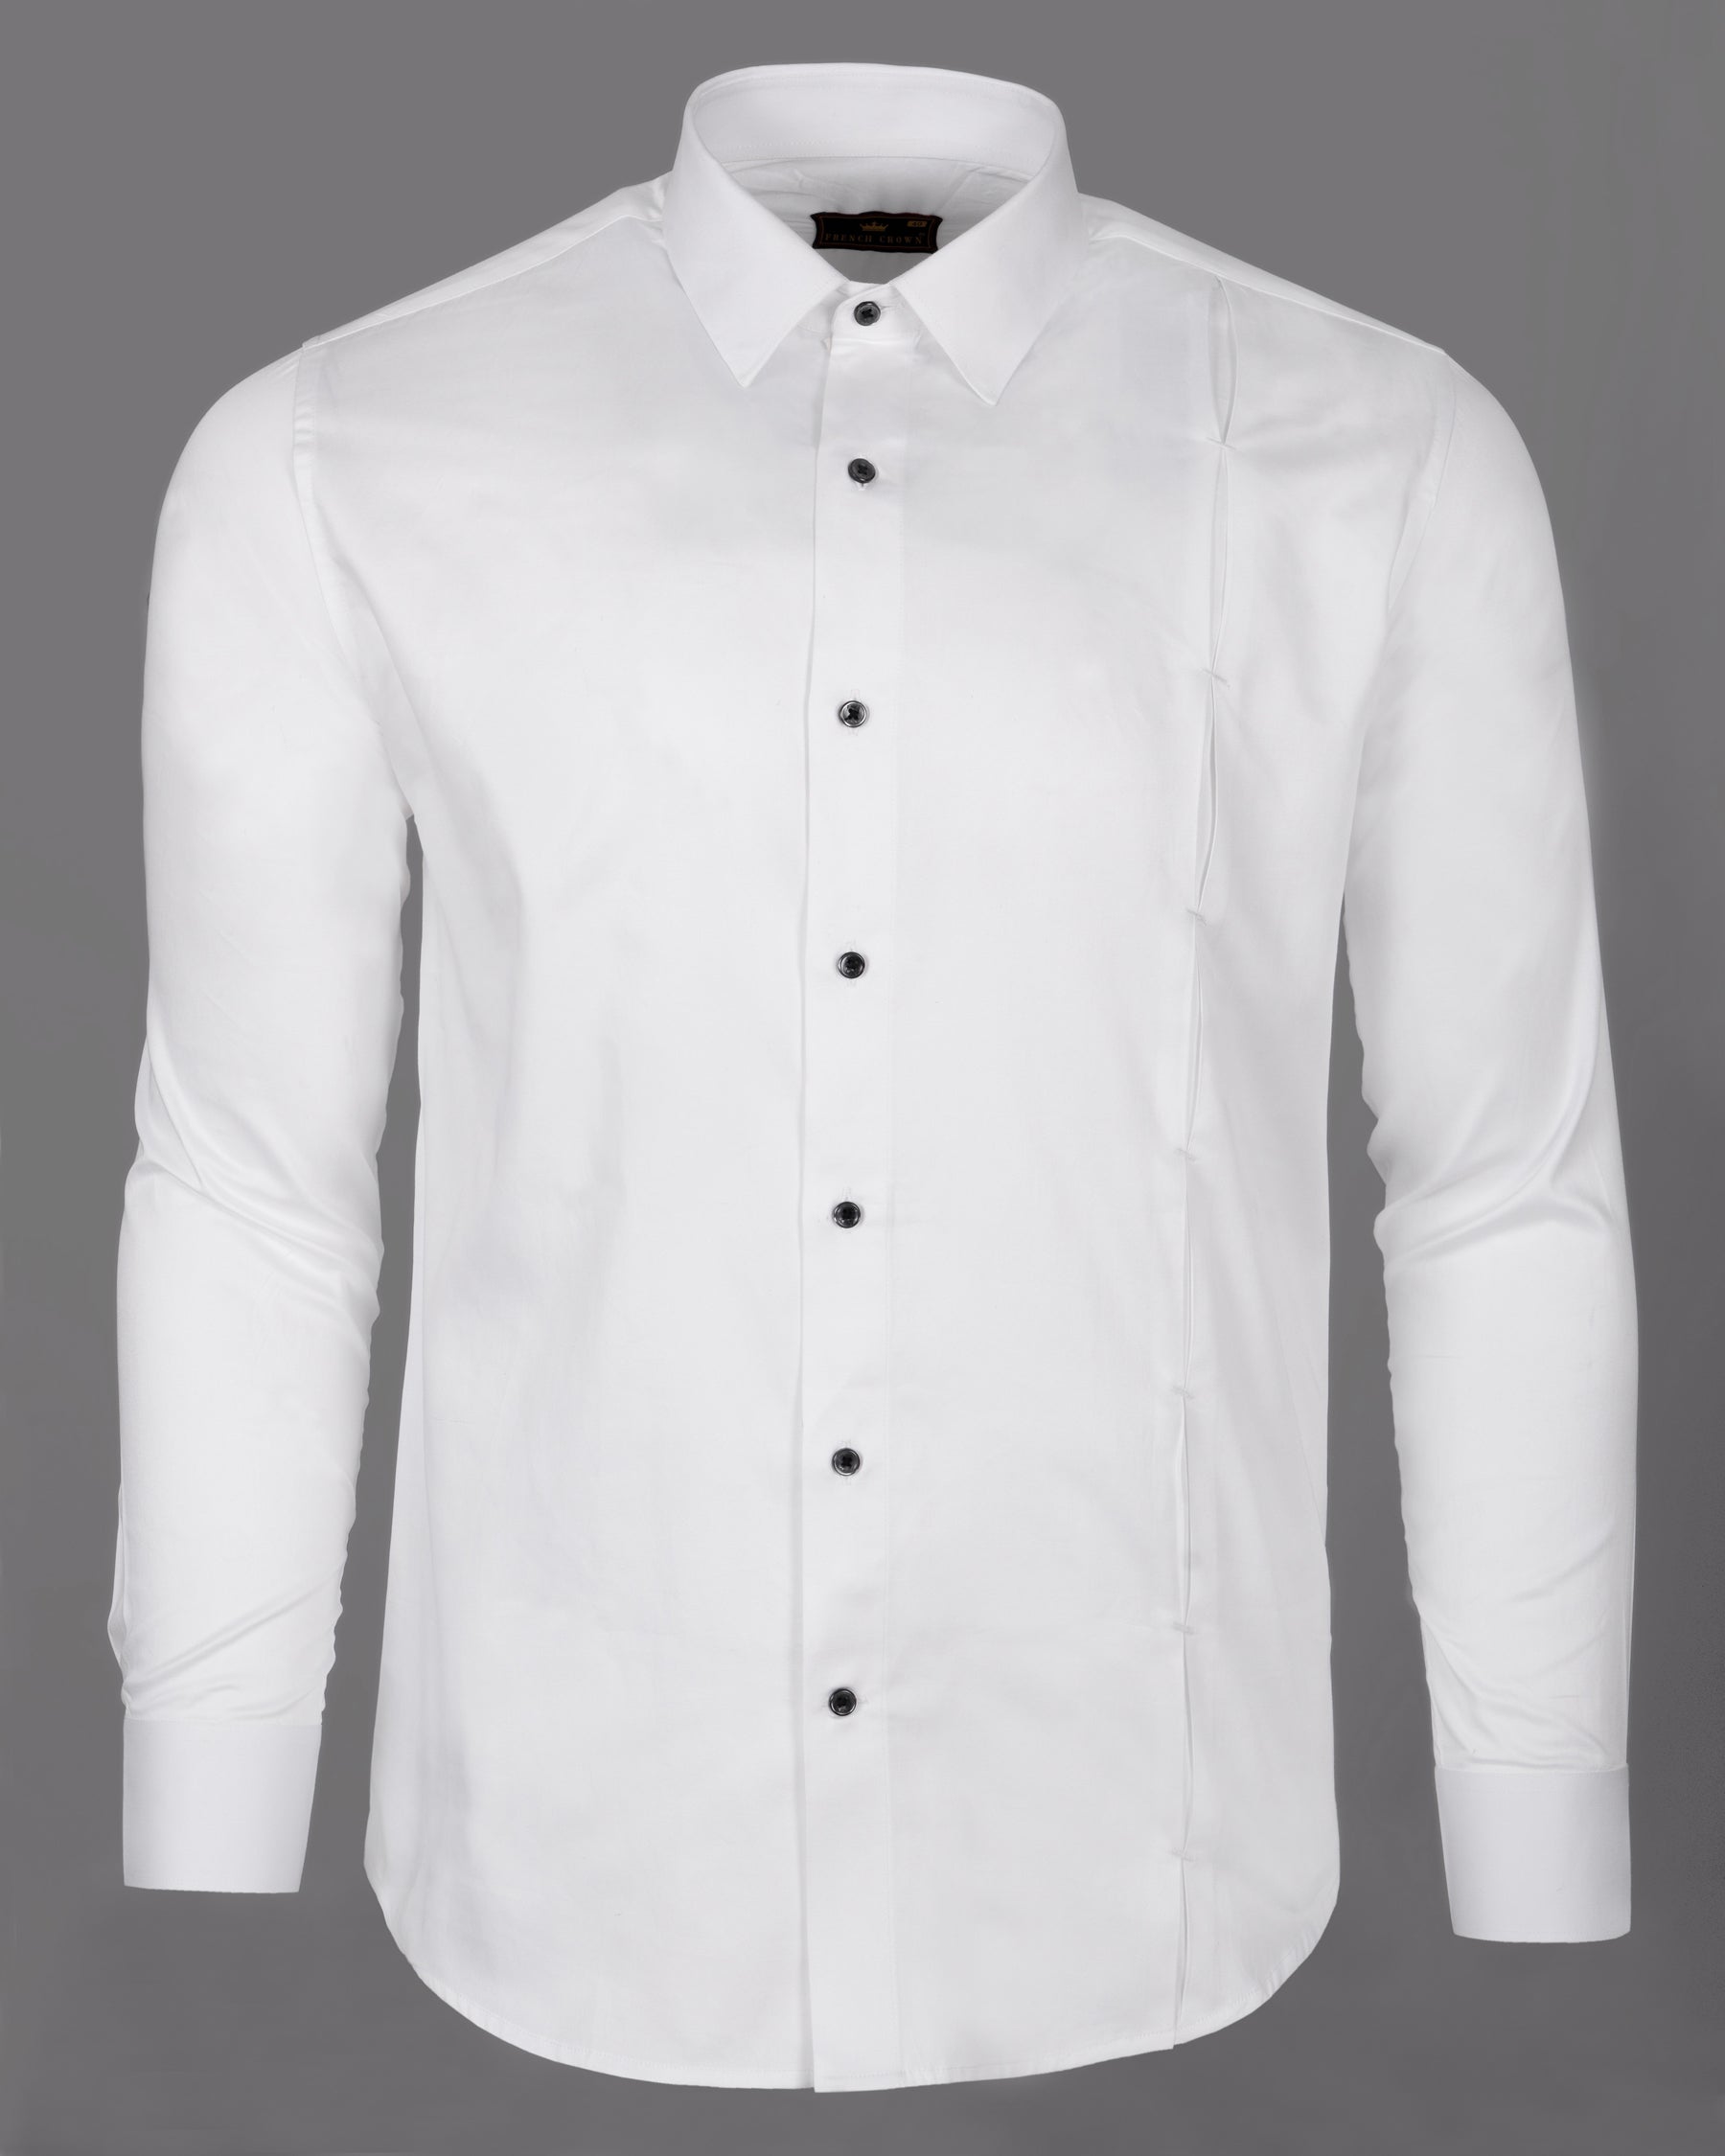 Bright White patterned Super Soft Premium Cotton Shirt 5026-BLK-P60-38,5026-BLK-P60-H-38,5026-BLK-P60-39,5026-BLK-P60-H-39,5026-BLK-P60-40,5026-BLK-P60-H-40,5026-BLK-P60-42,5026-BLK-P60-H-42,5026-BLK-P60-44,5026-BLK-P60-H-44,5026-BLK-P60-46,5026-BLK-P60-H-46,5026-BLK-P60-48,5026-BLK-P60-H-48,5026-BLK-P60-50,5026-BLK-P60-H-50,5026-BLK-P60-52,5026-BLK-P60-H-52